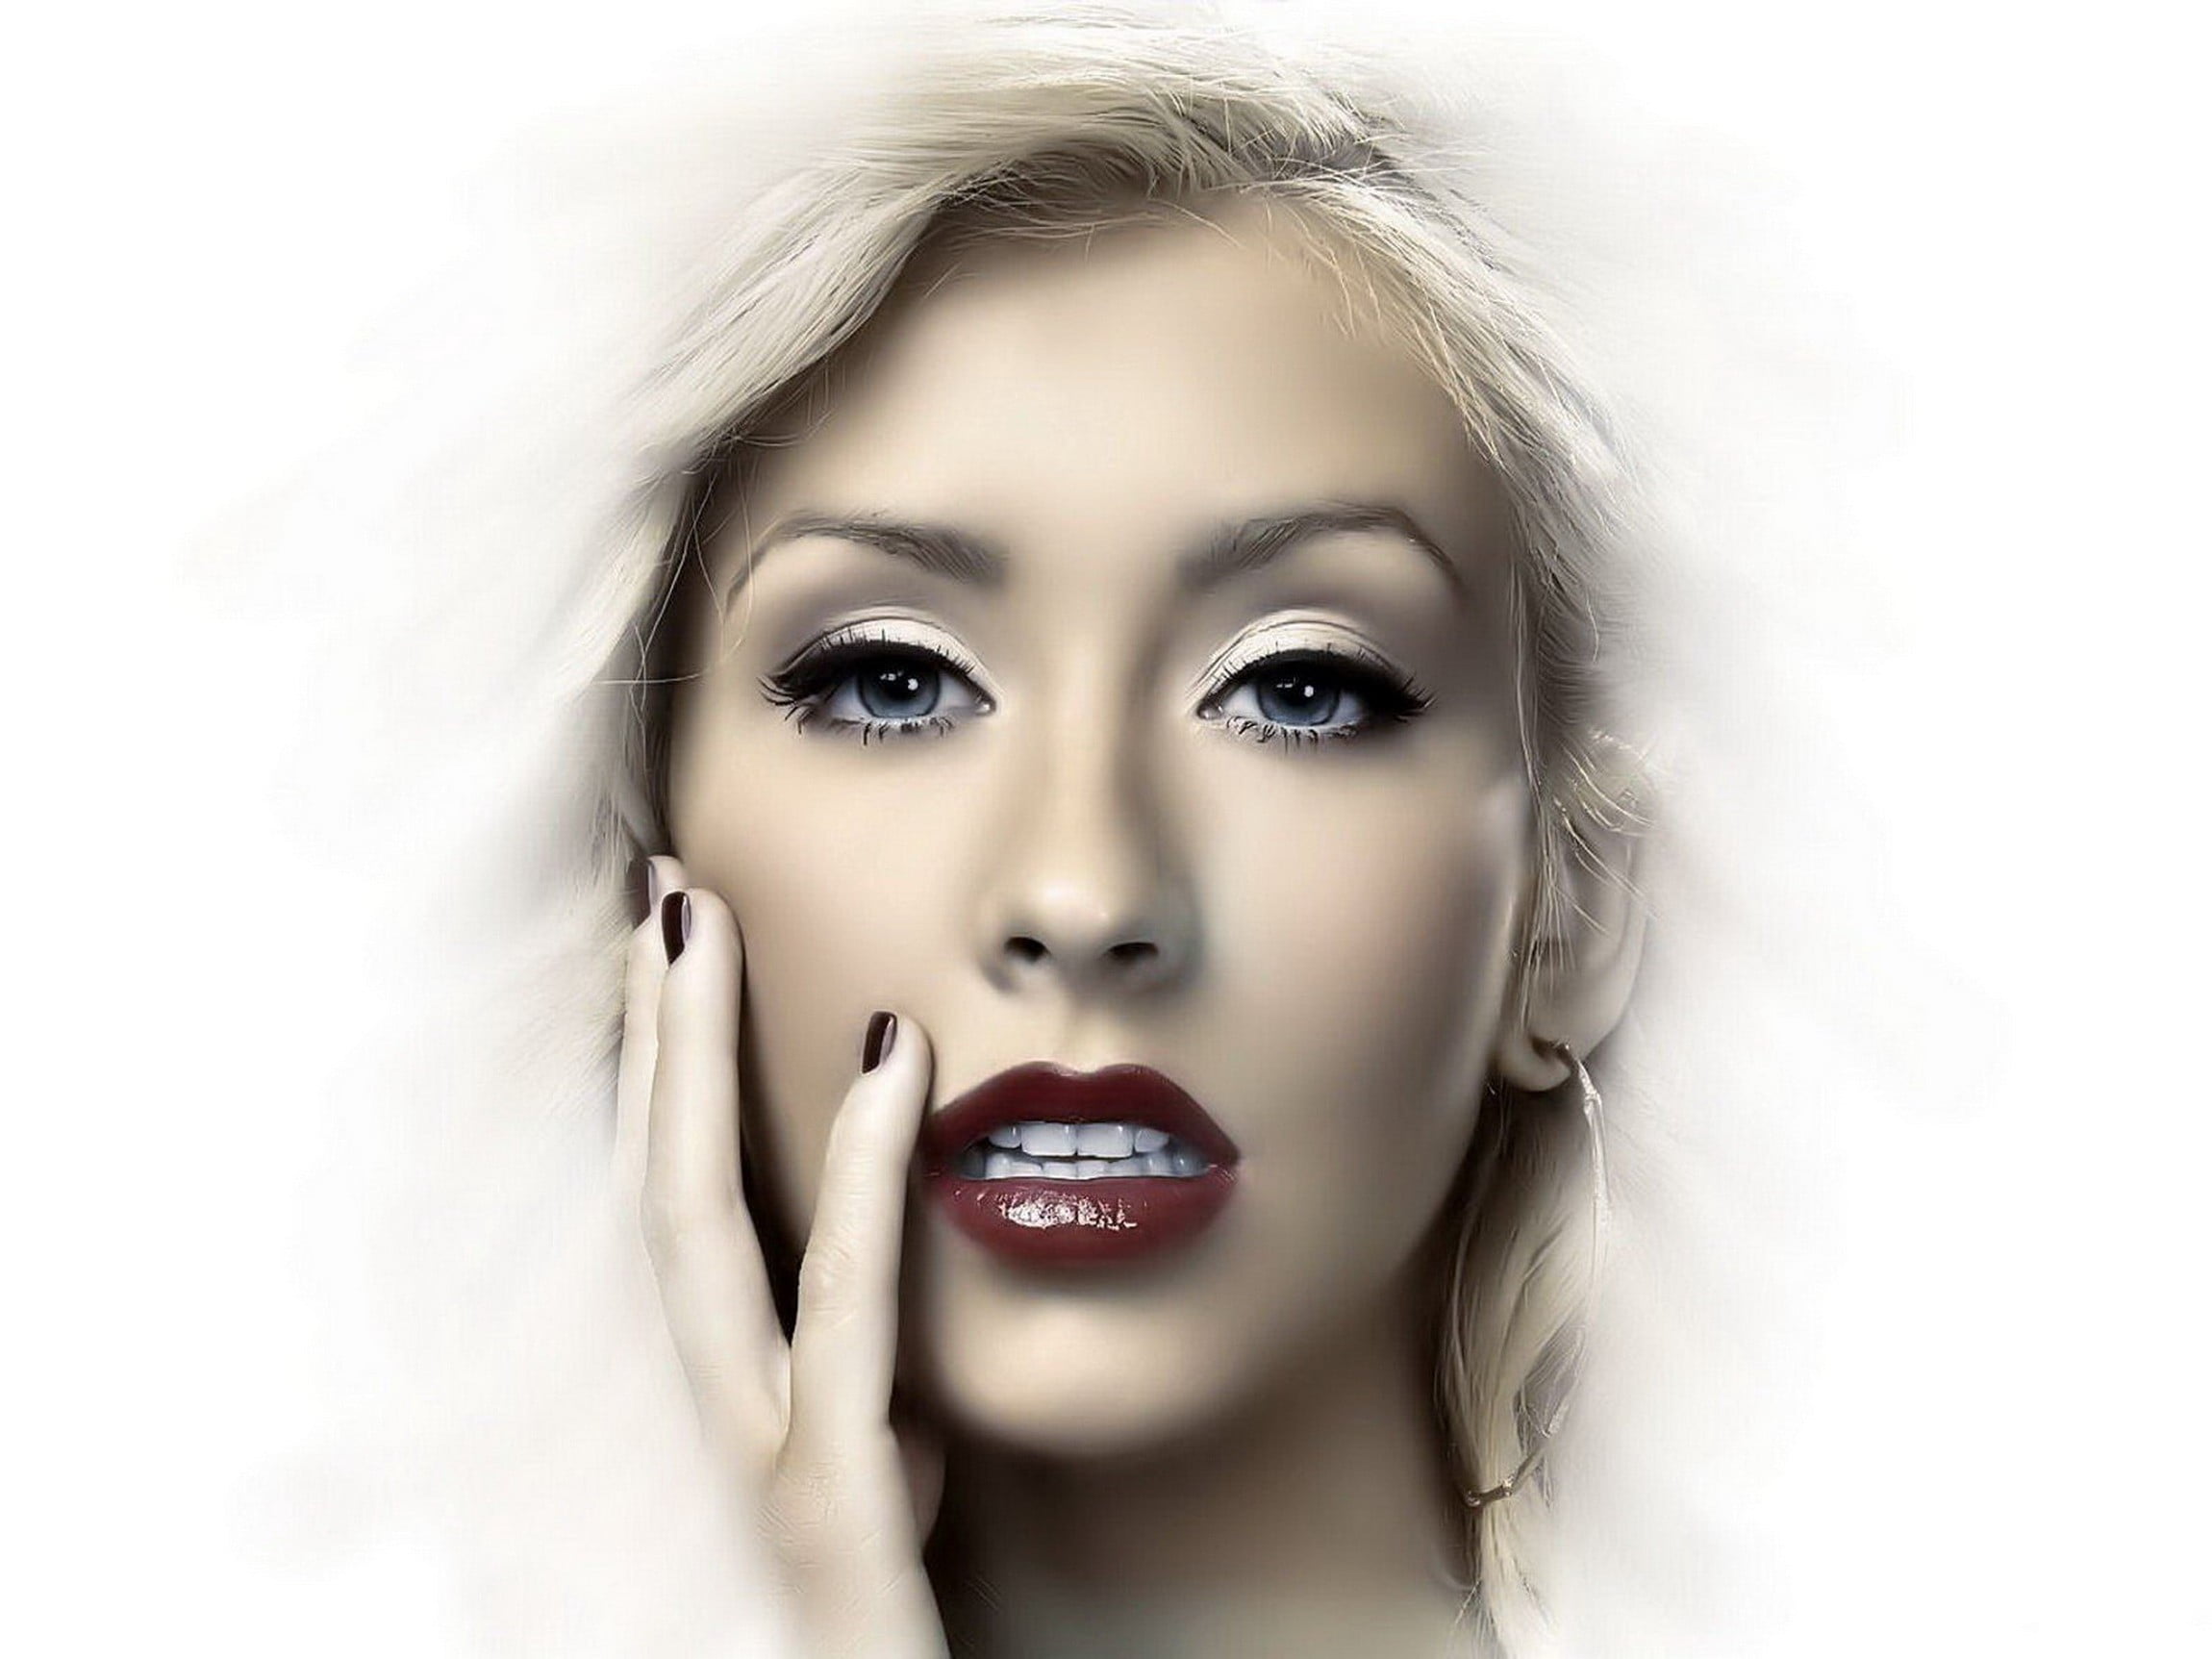 Christina Aguilera, Christina Aguilera, singer, vignette, face